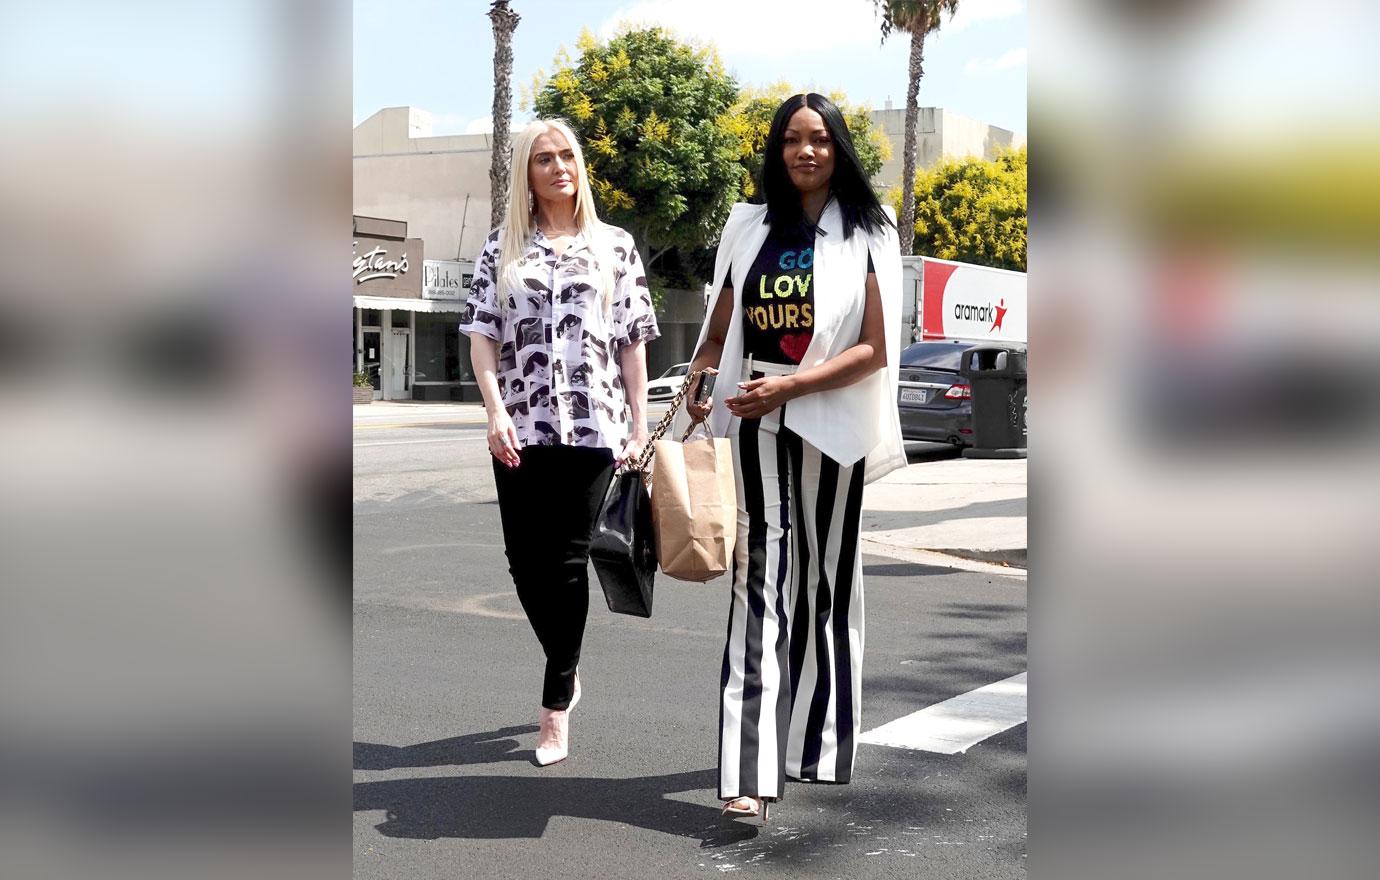 RHOBH' Stars Garcelle Beauvais & Erika Jayne Go Shopping